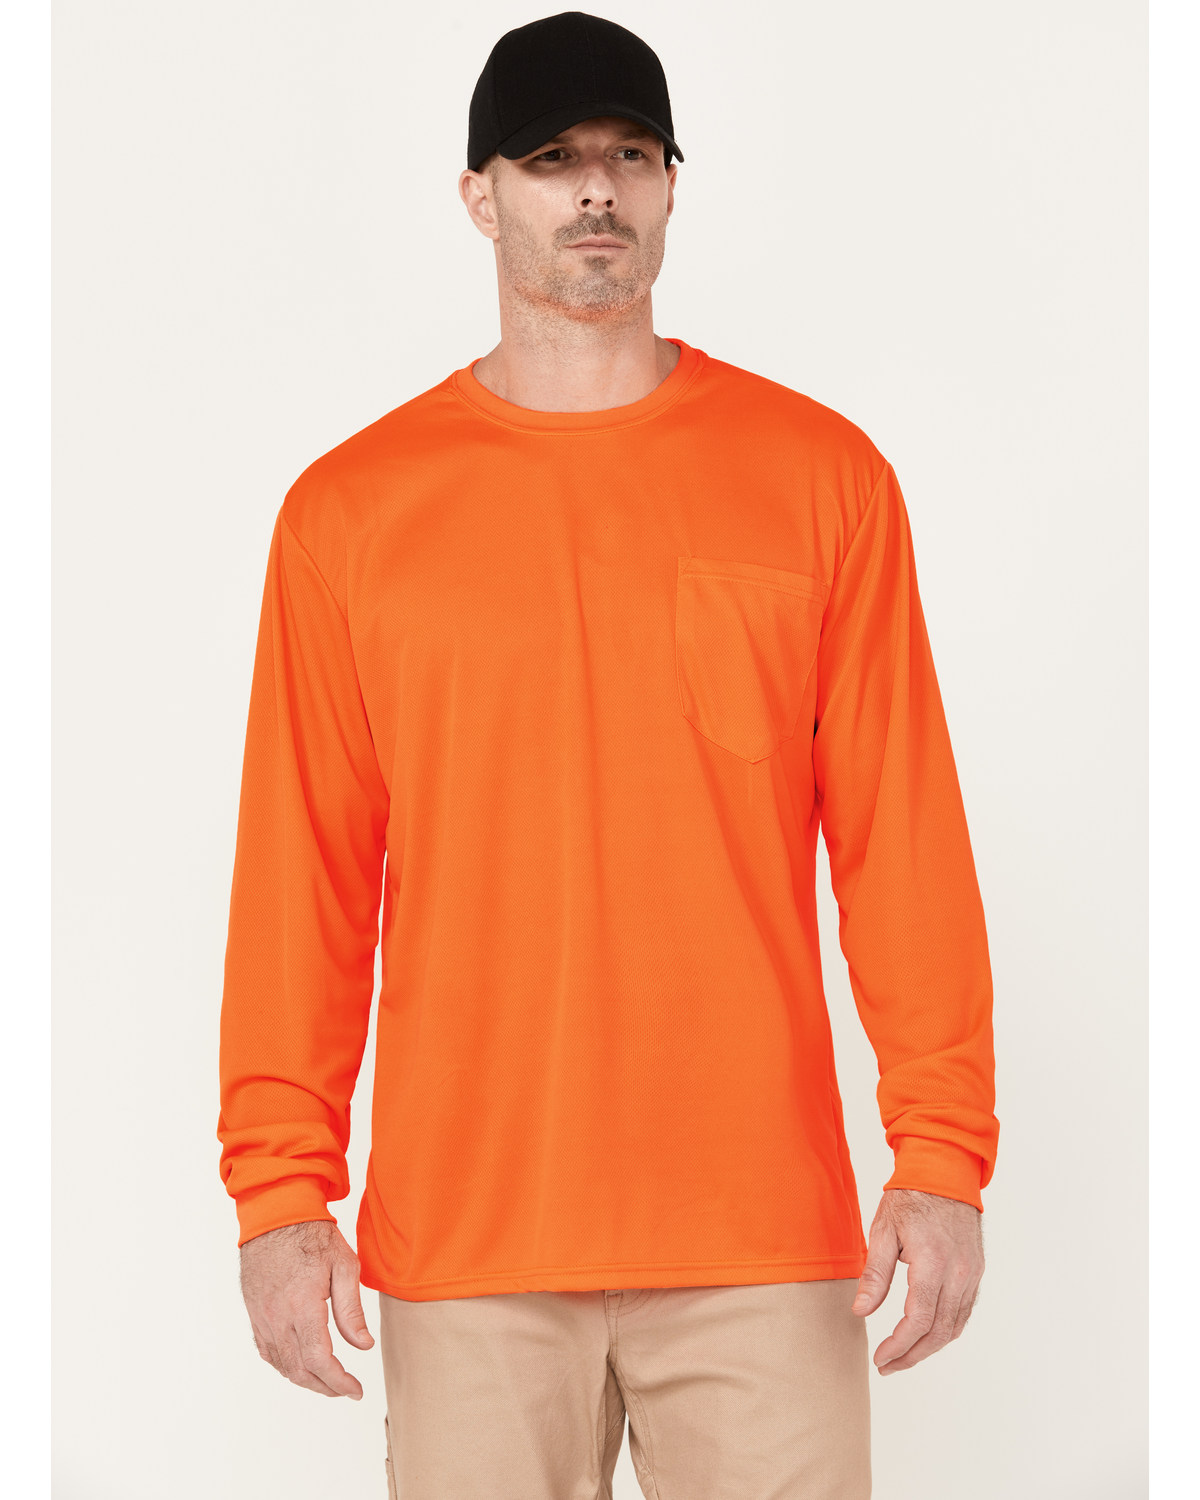 Hawx Men's High-Visibility Long Sleeve Work Shirt